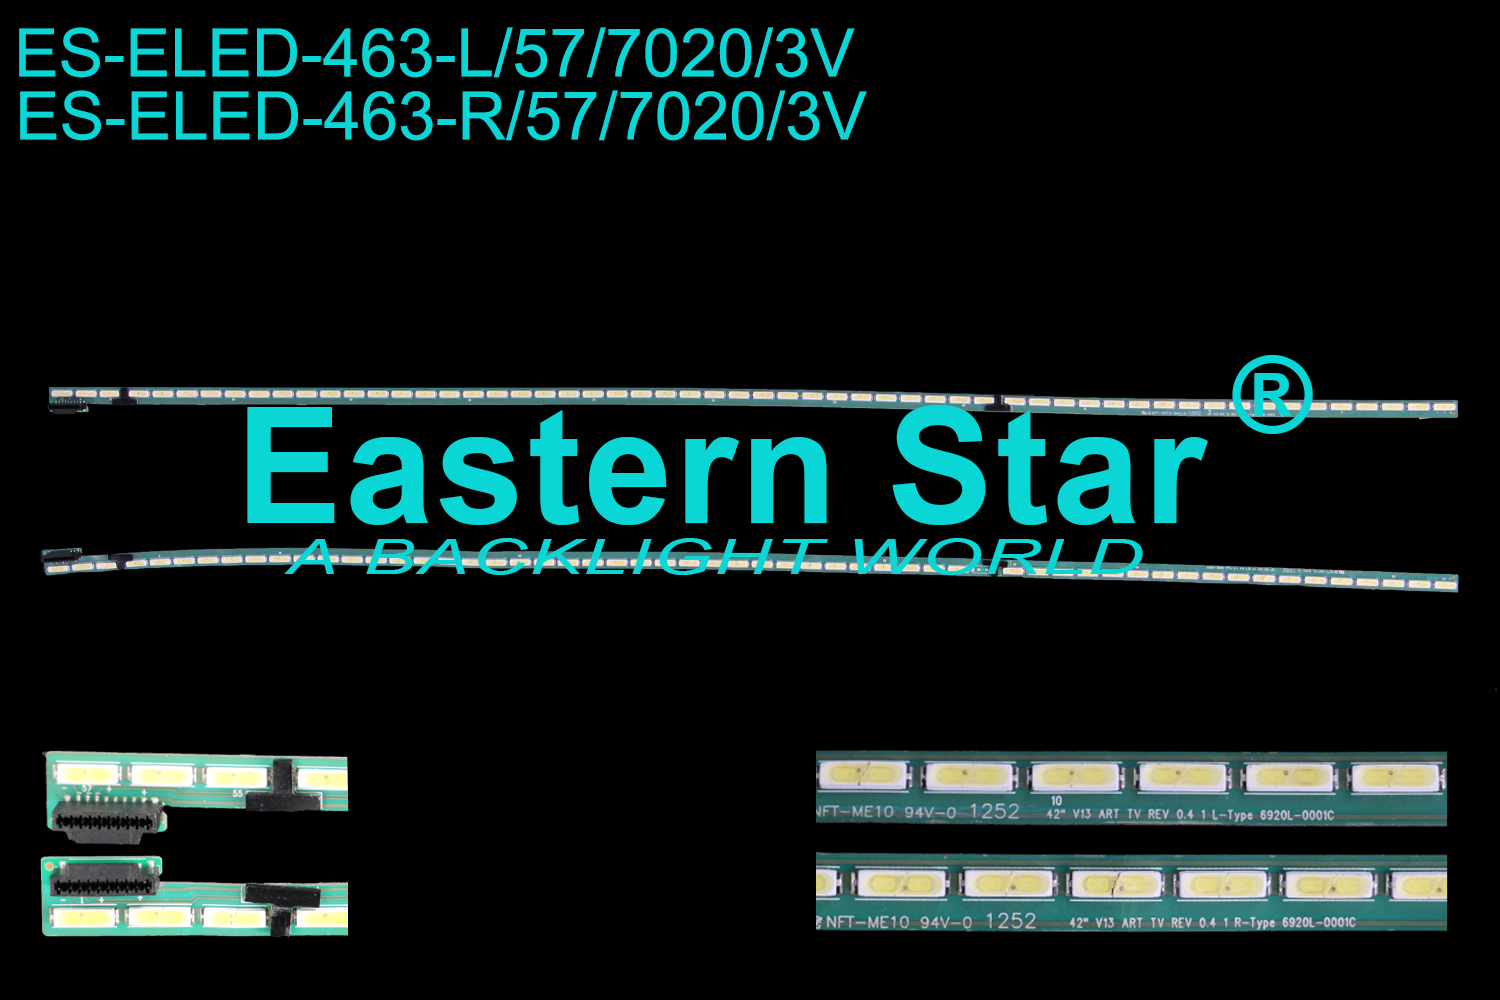 ES-ELED-463 ELED/EDGE TV backlight use for 42'' Lg /Philips 42LA660V L: 42" V13 ART TV REV 0.4 1 L-Type 6920L-0001C  R: 42" V13 ART TV REV 0.4 1 R-Type 6920L-0001C  6916L 1194A,6916L 1195A,6922L-0072A  LED STRIPS(2）